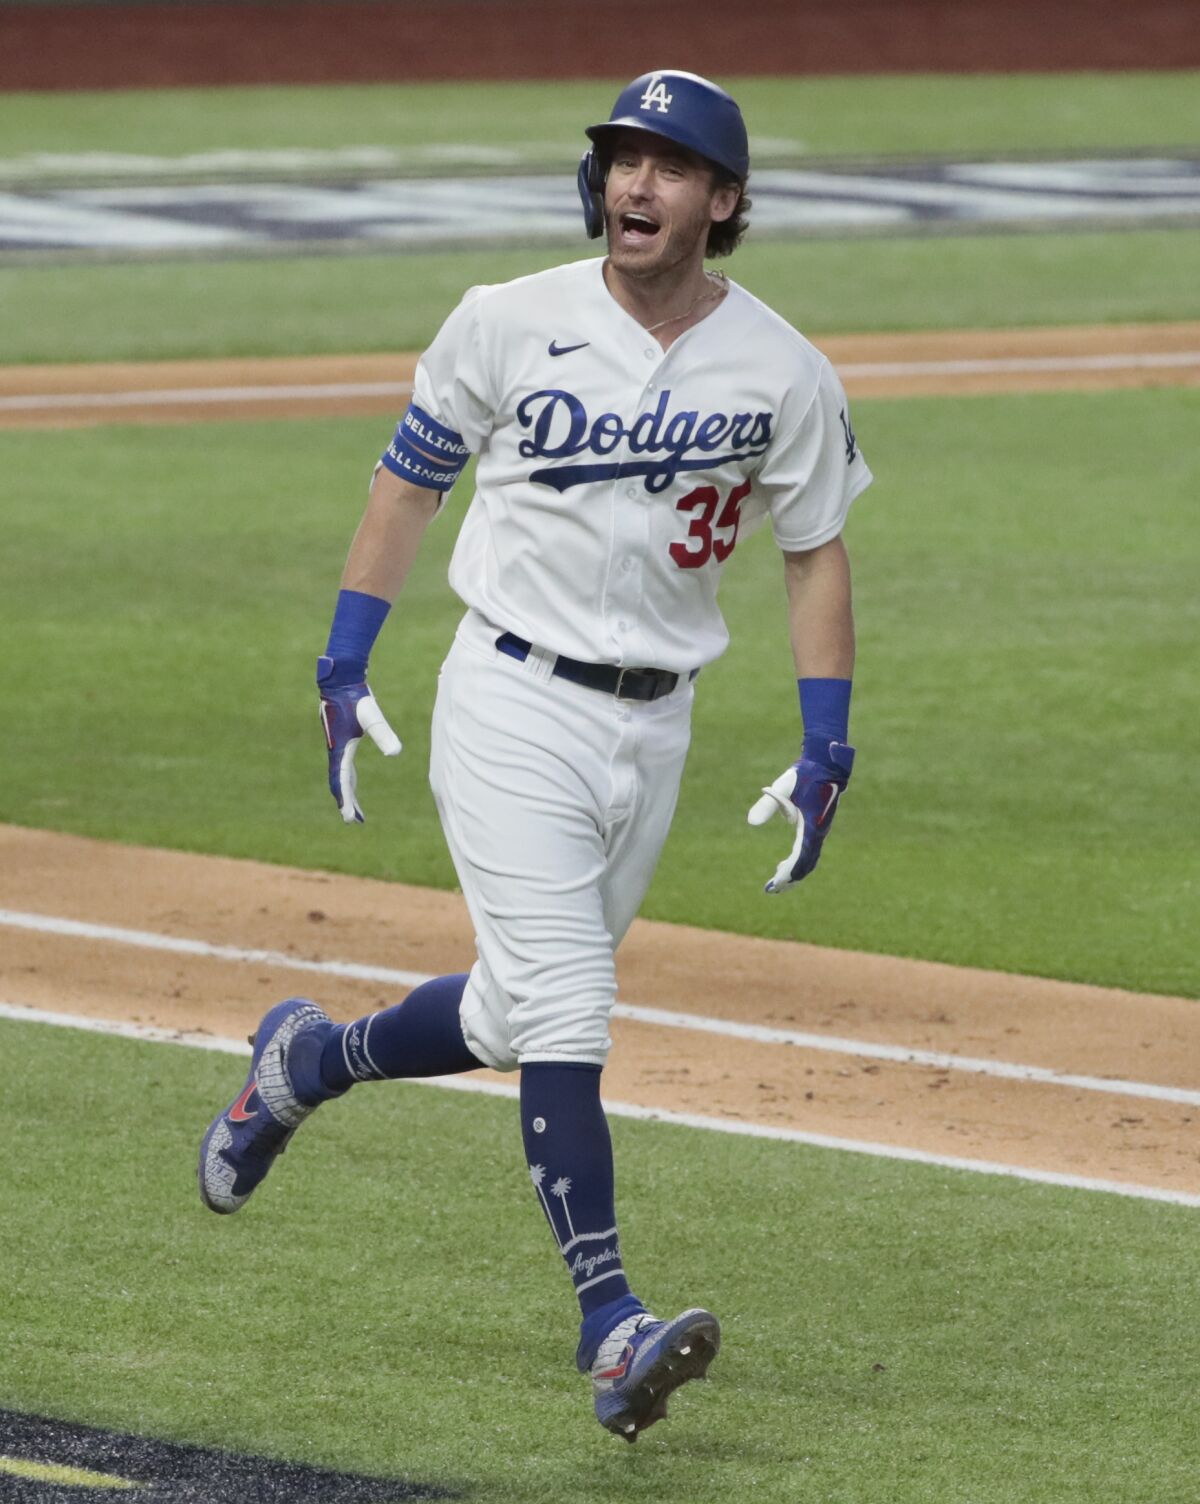 Dodgers center fielder Cody Bellinger celebrates after hitting a home run.